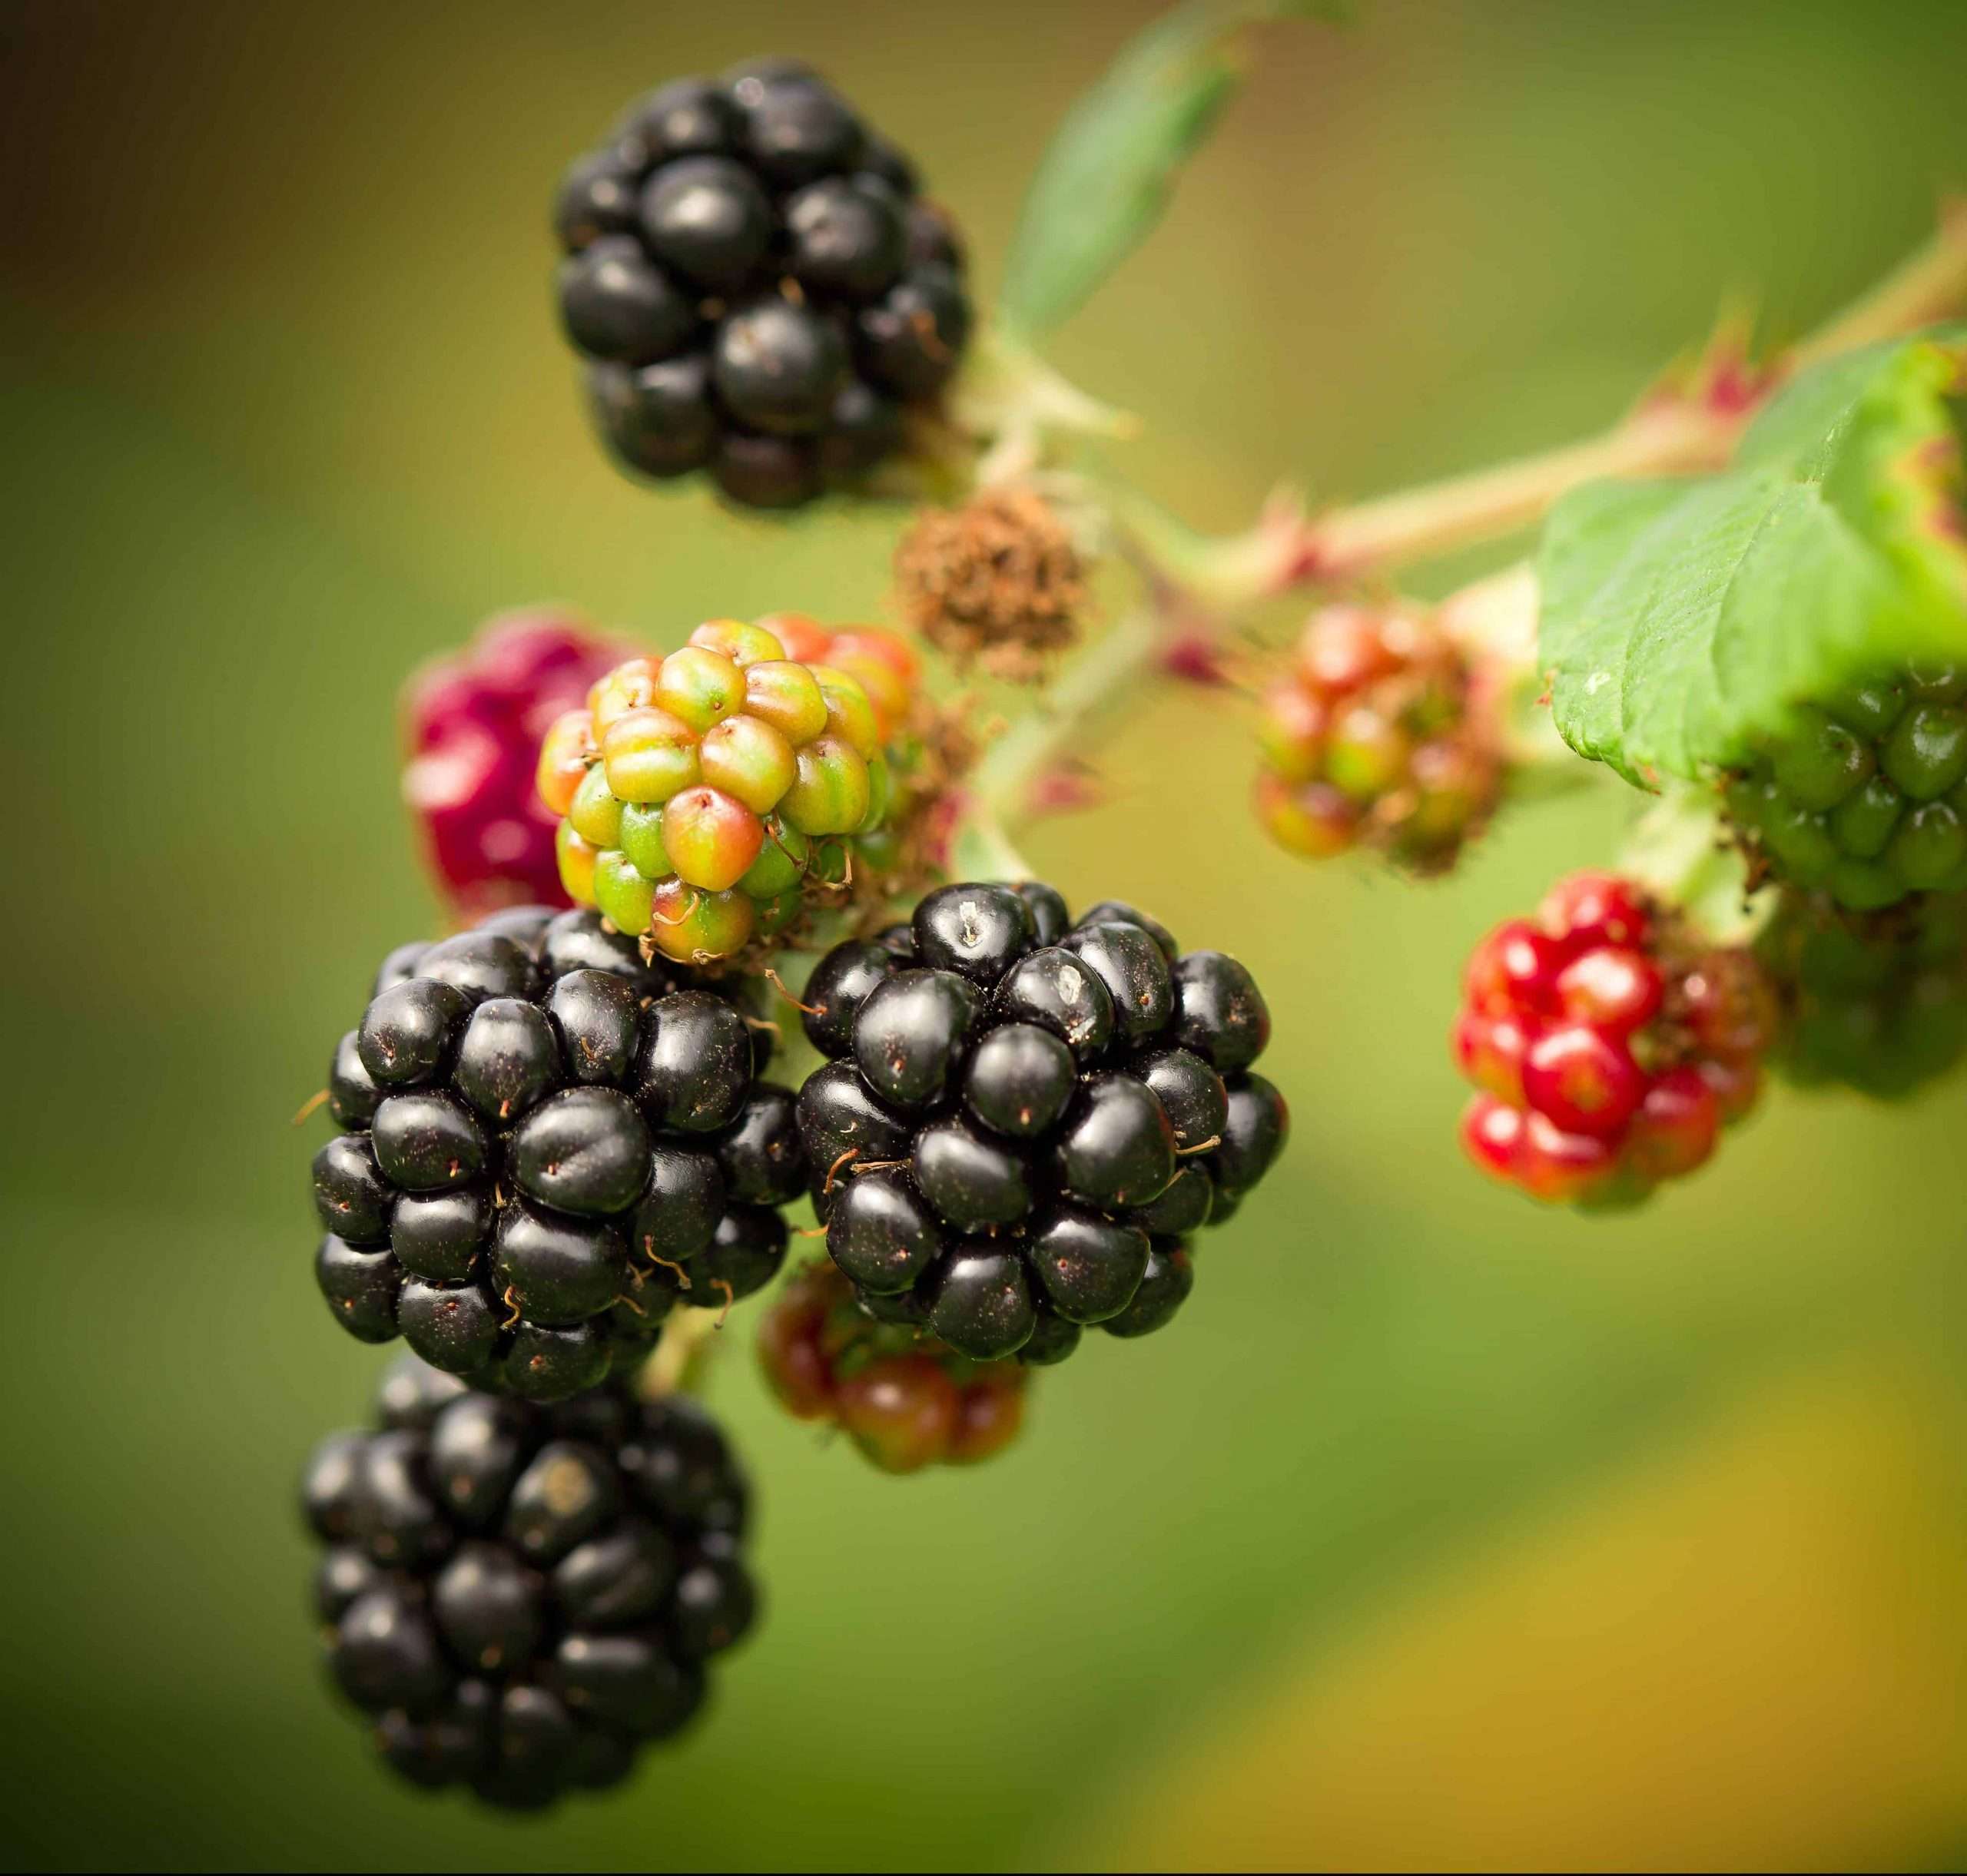 7 Steps to Propagate Tame Blackberries